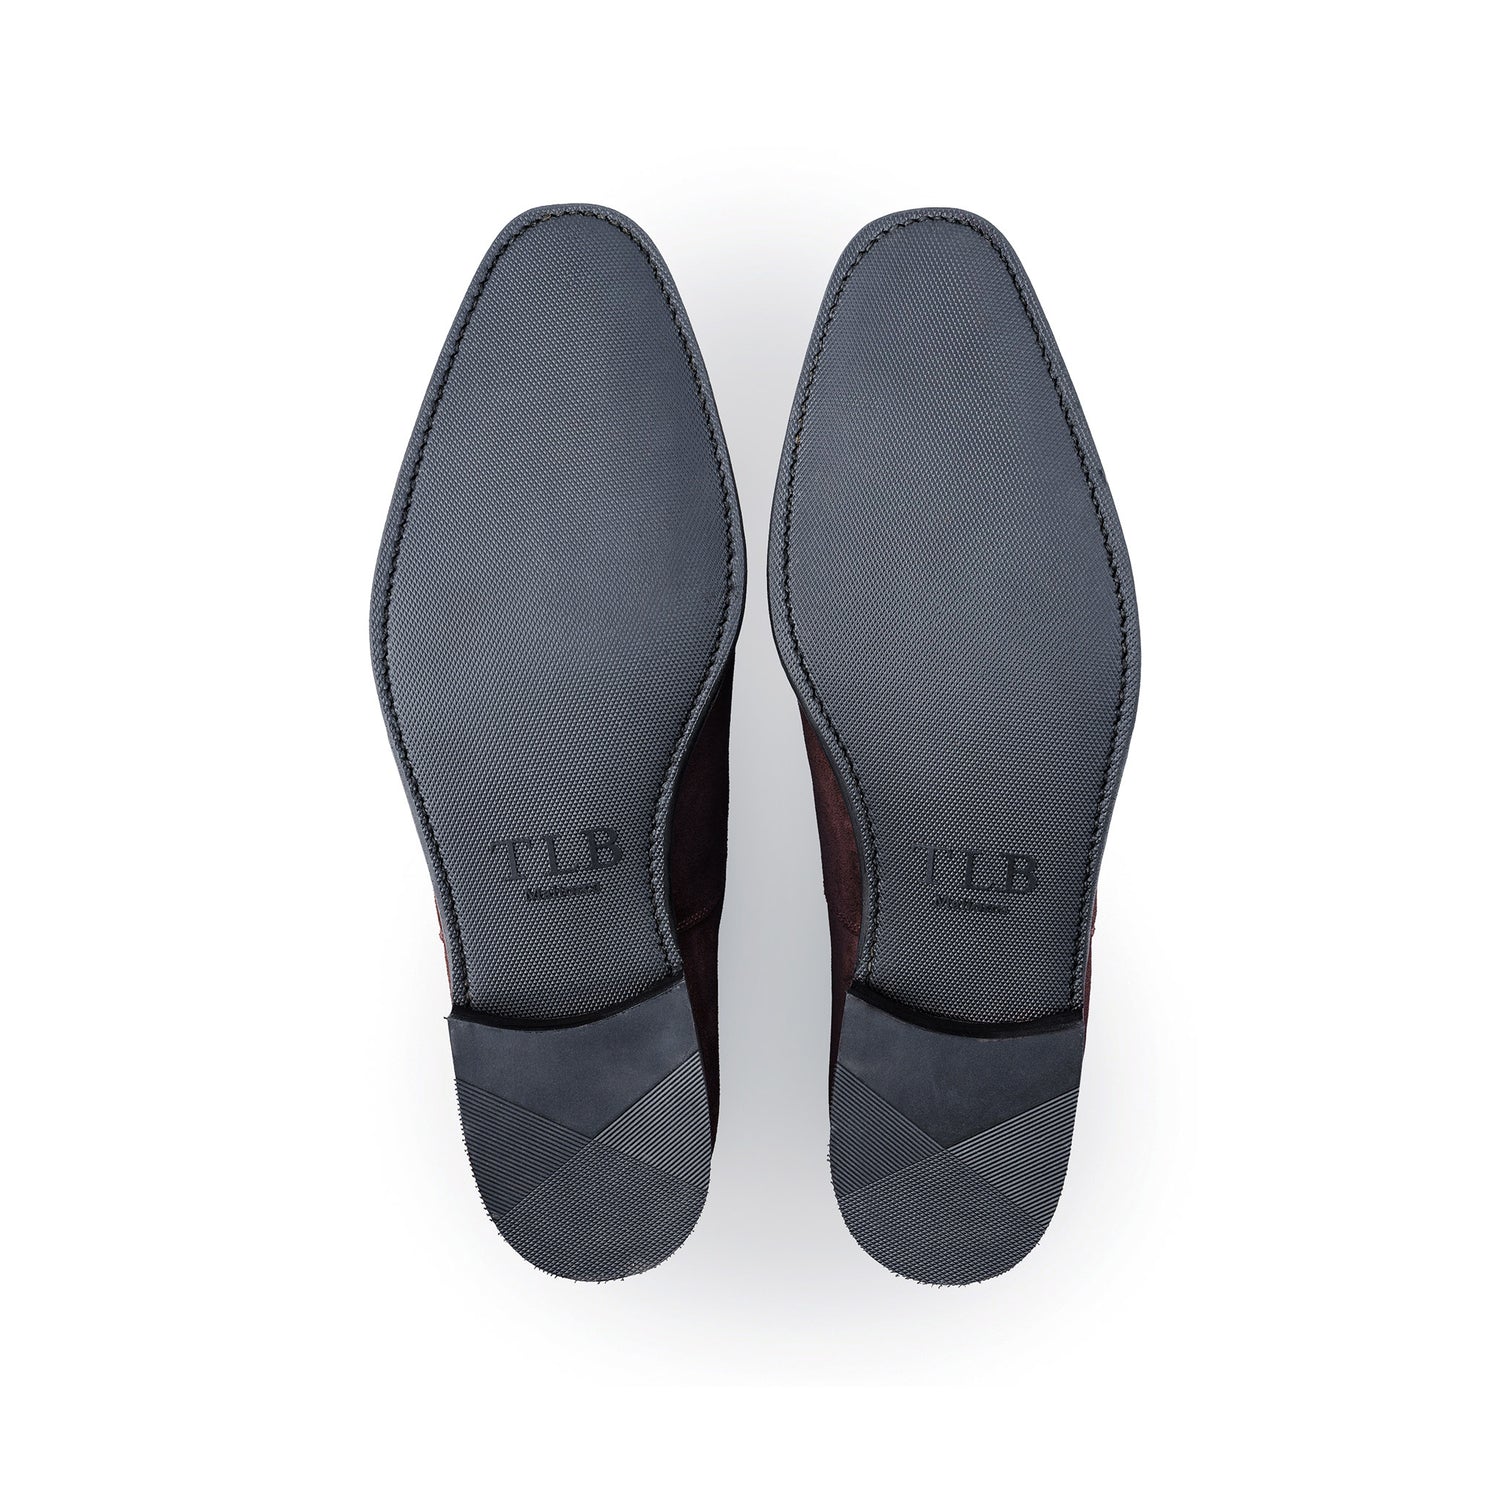 TLB Mallorca leather shoes 133 / GOYA / BOXCALF BLACK